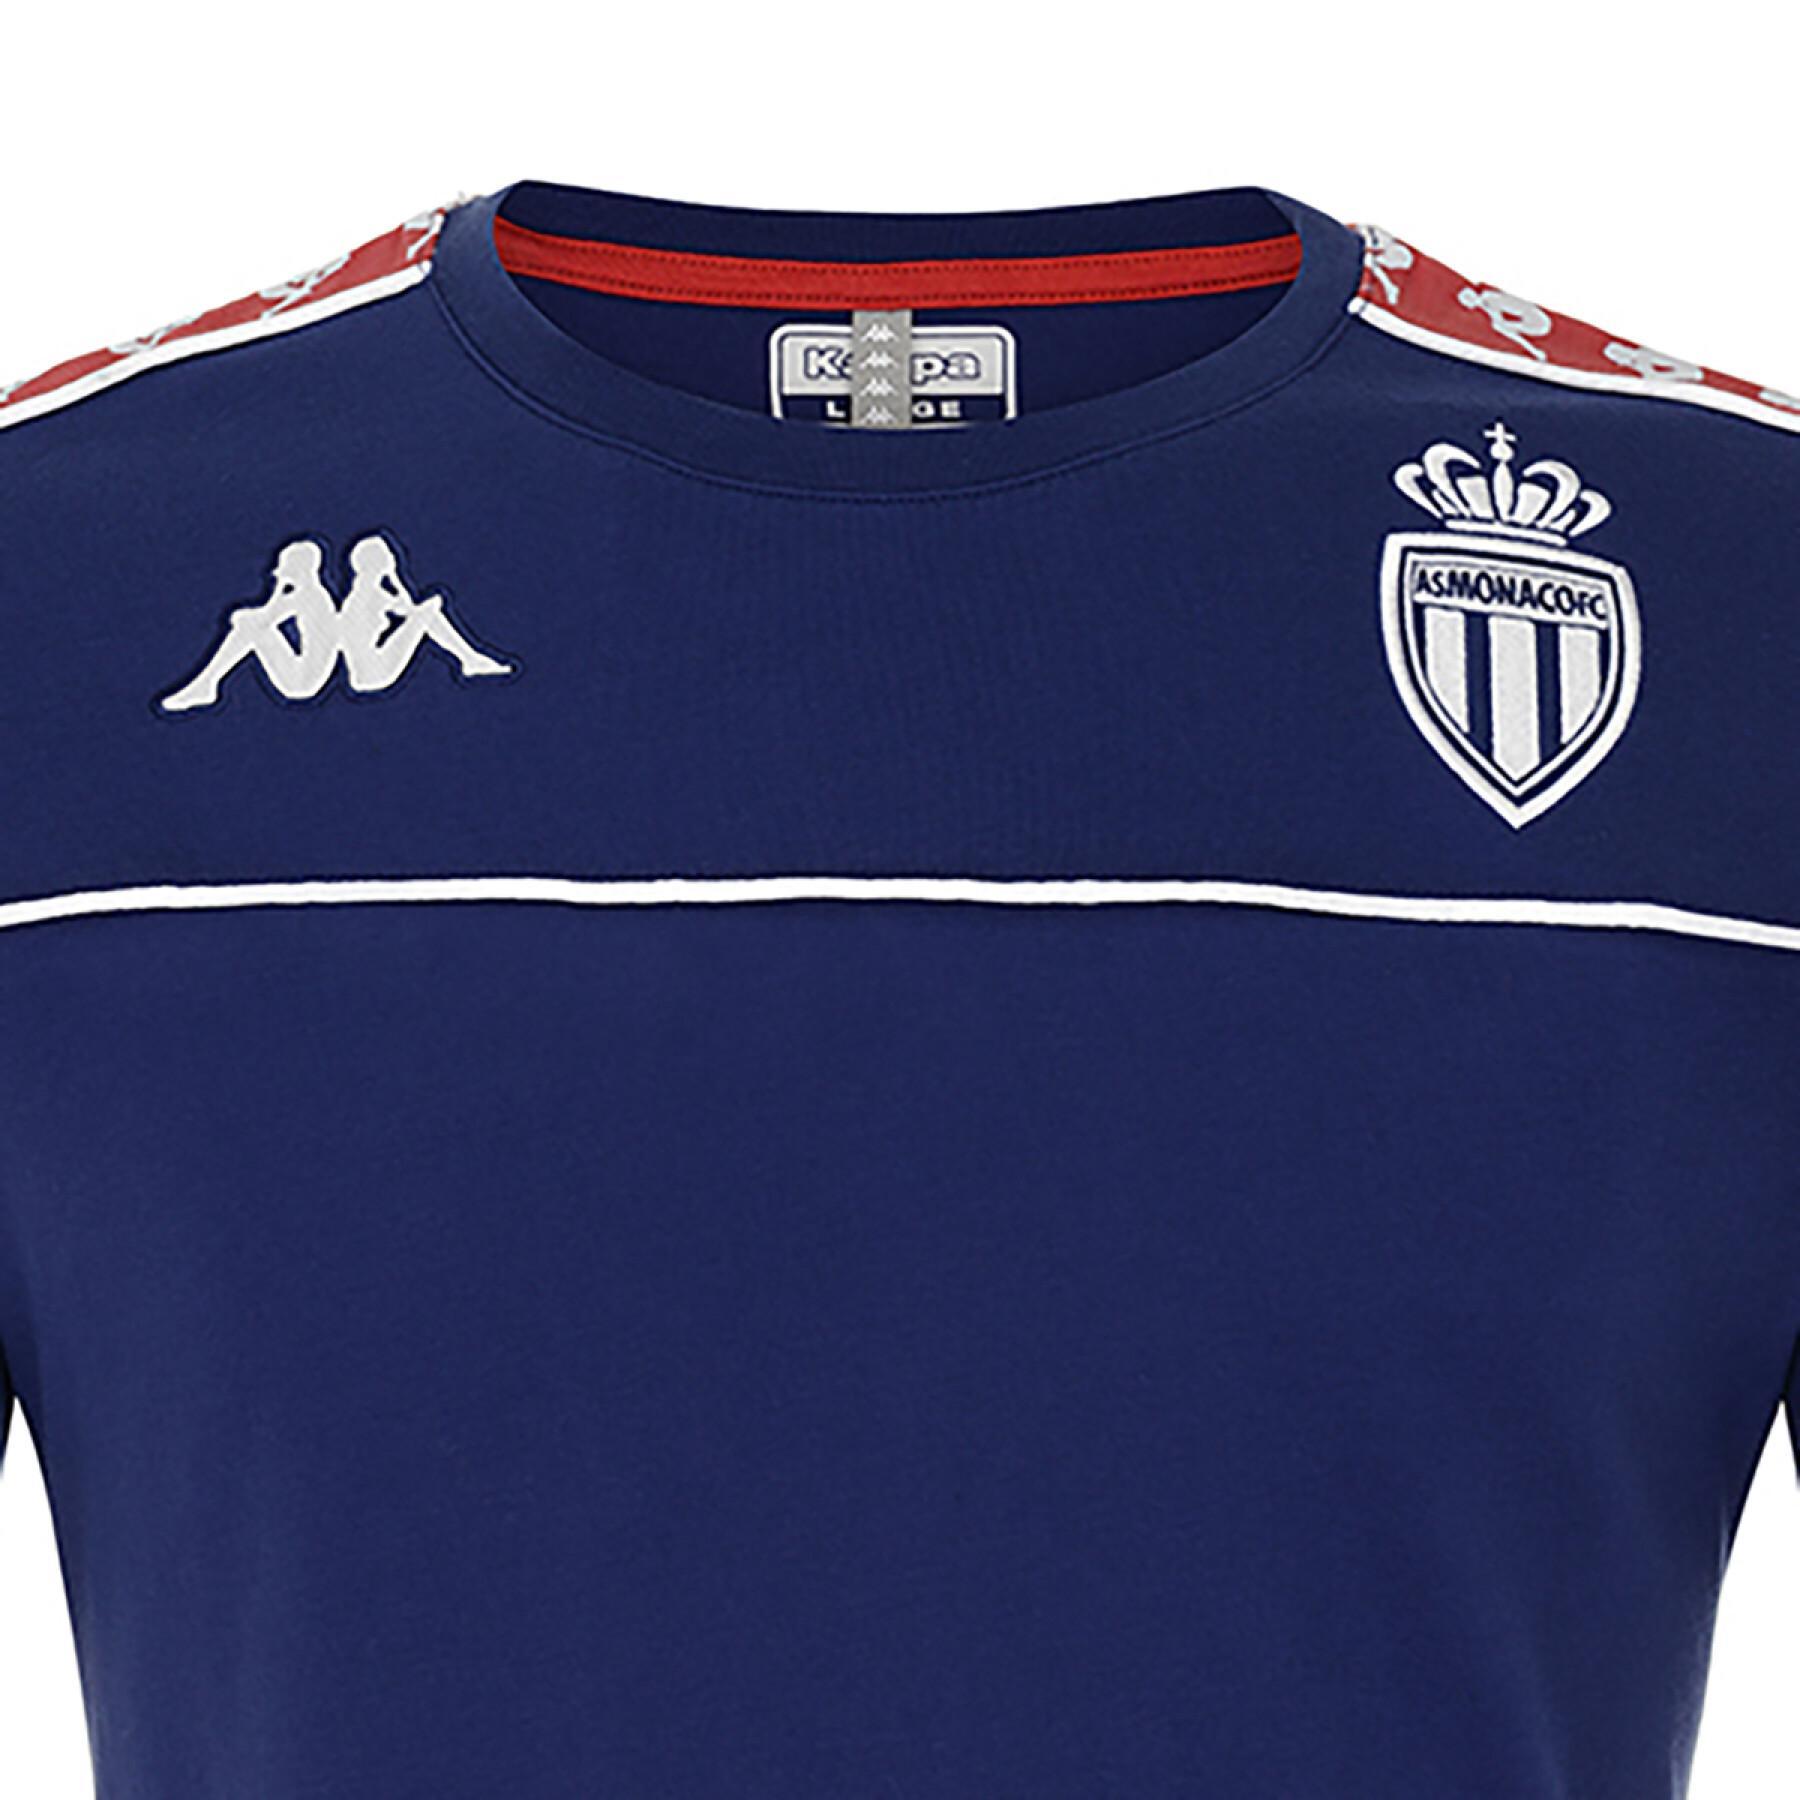 Camiseta AS Monaco 2021/22 222 banda arari slim